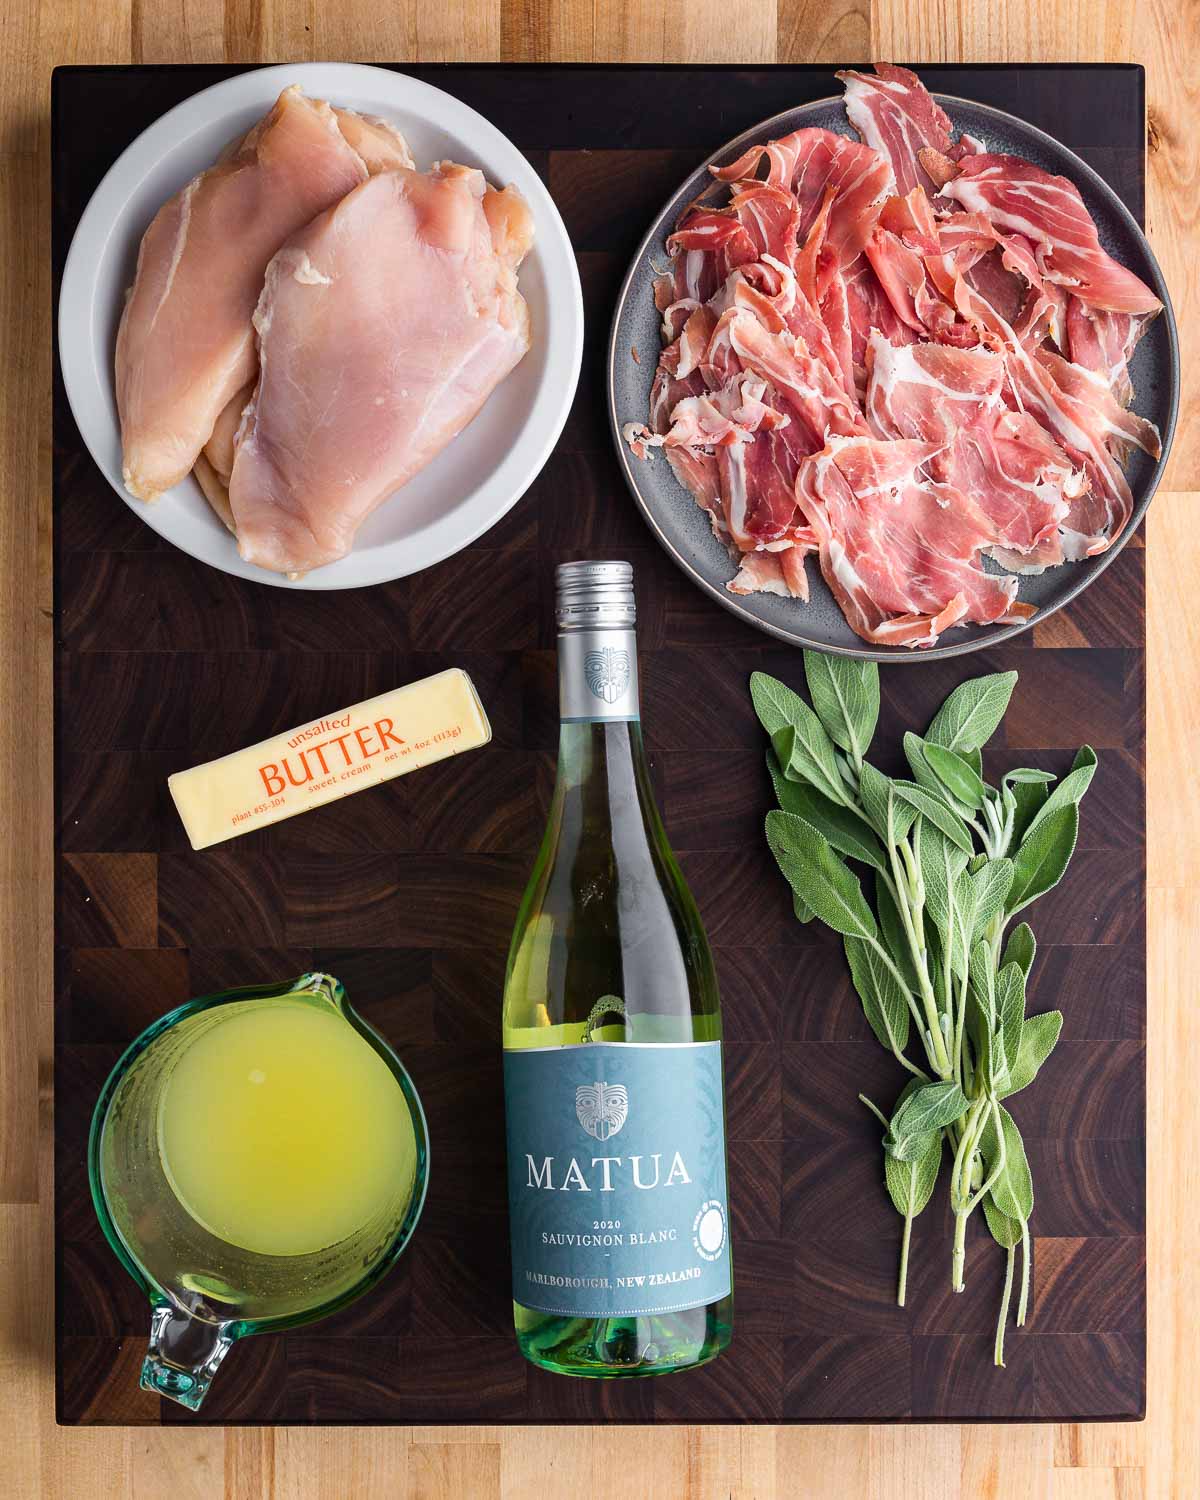 Ingredients shown: chicken breasts, prosciutto, butter, chicken stock, wine, and sage.